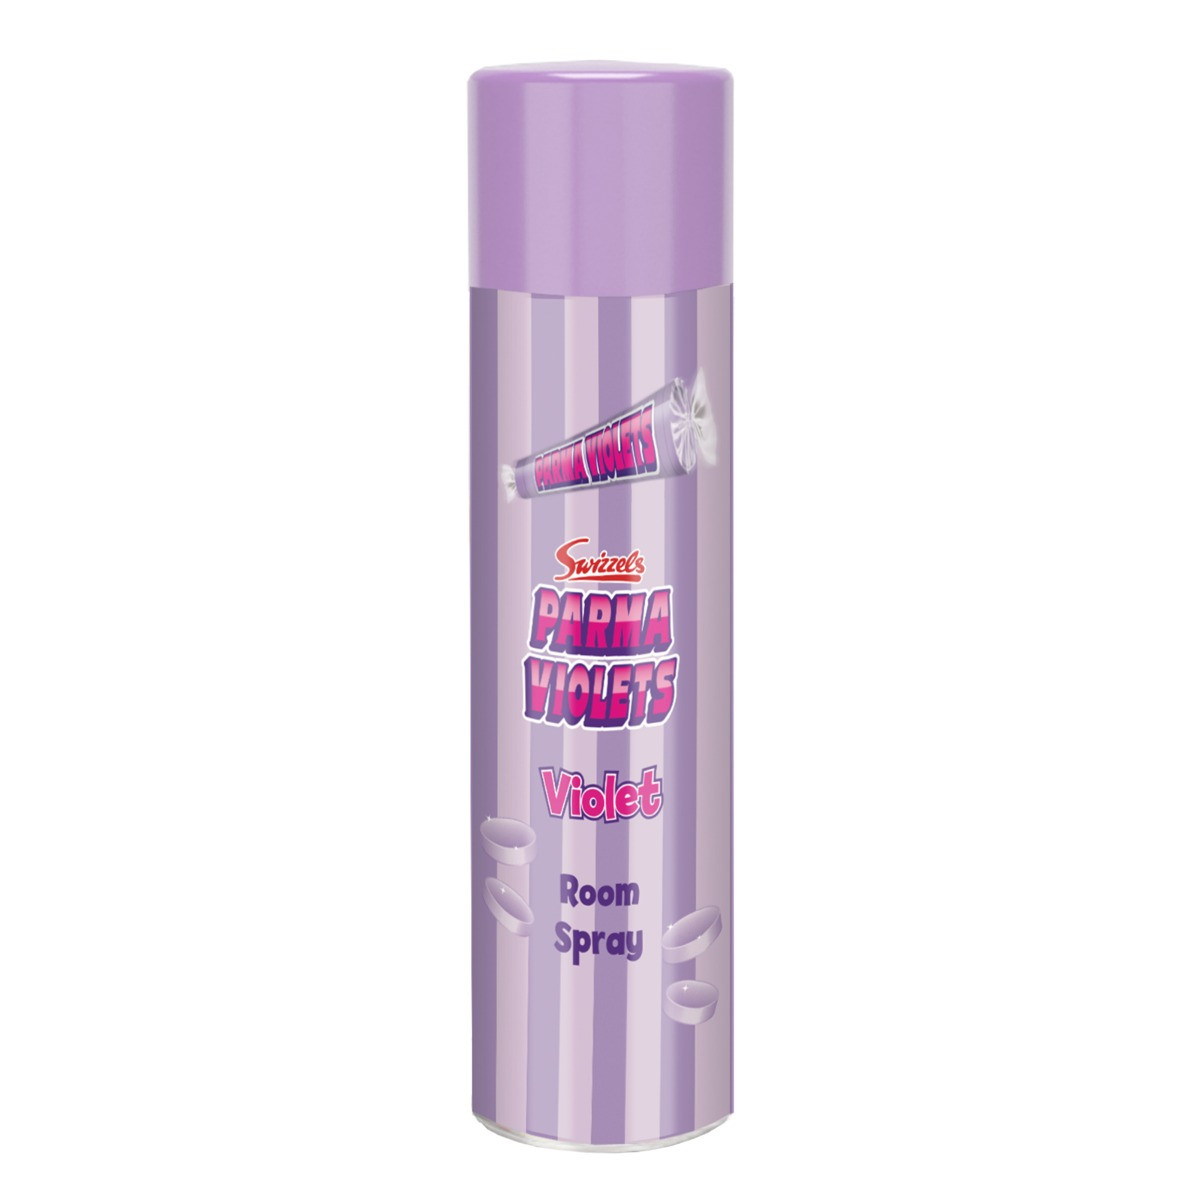 Swizzels 300ml Room Spray - Parma Violets>